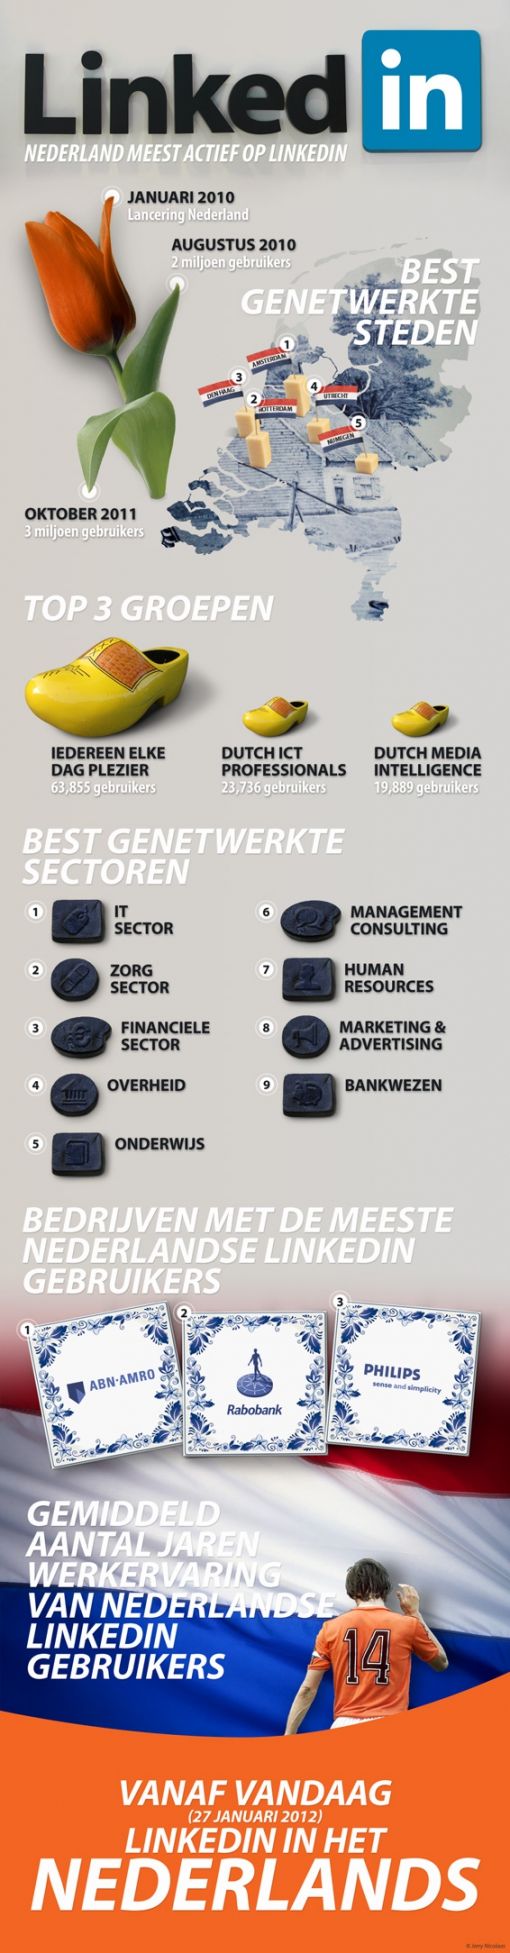 infographic-nl-li